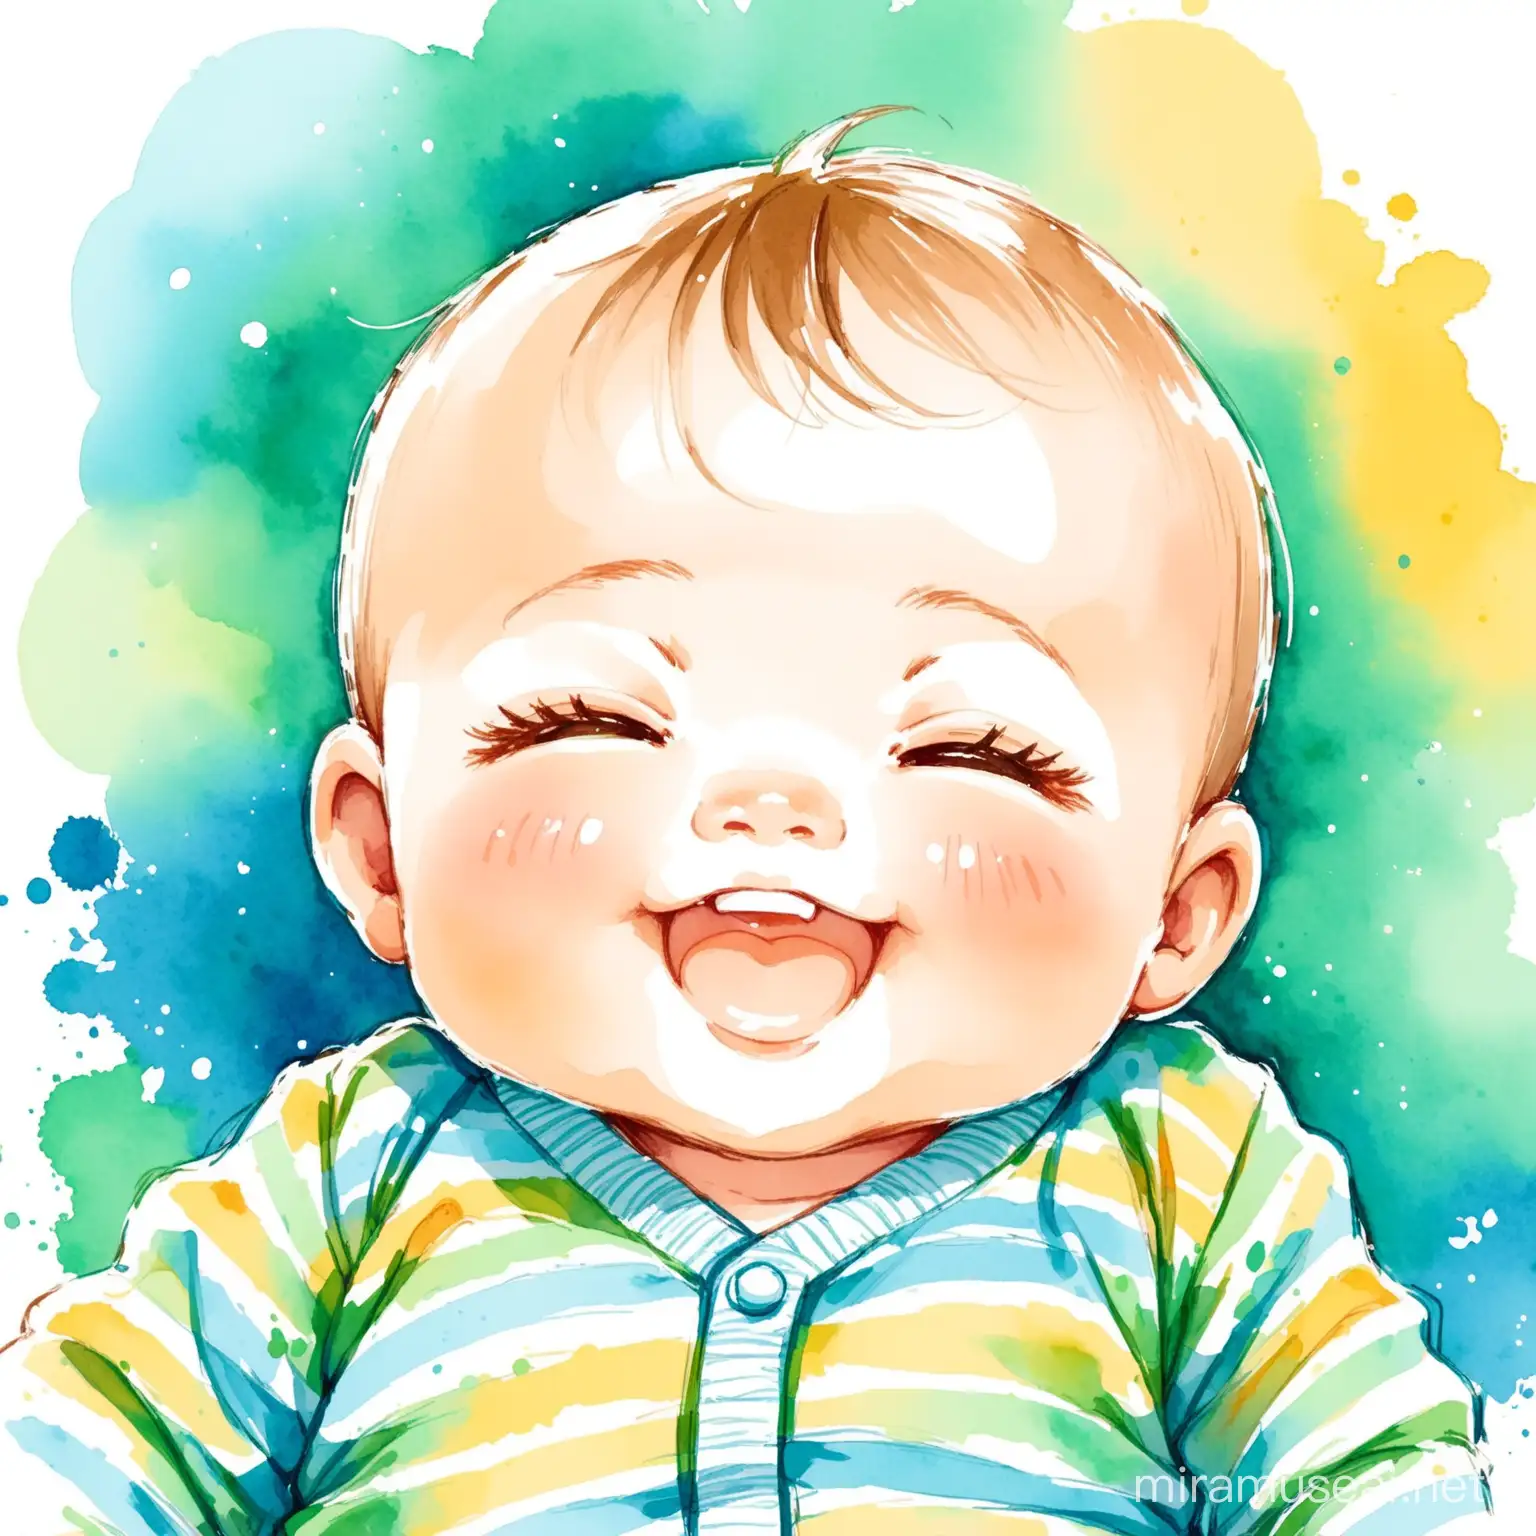 Cheerful Watercolor Sketch of a Baby Boy Splashing in Joyful Delight